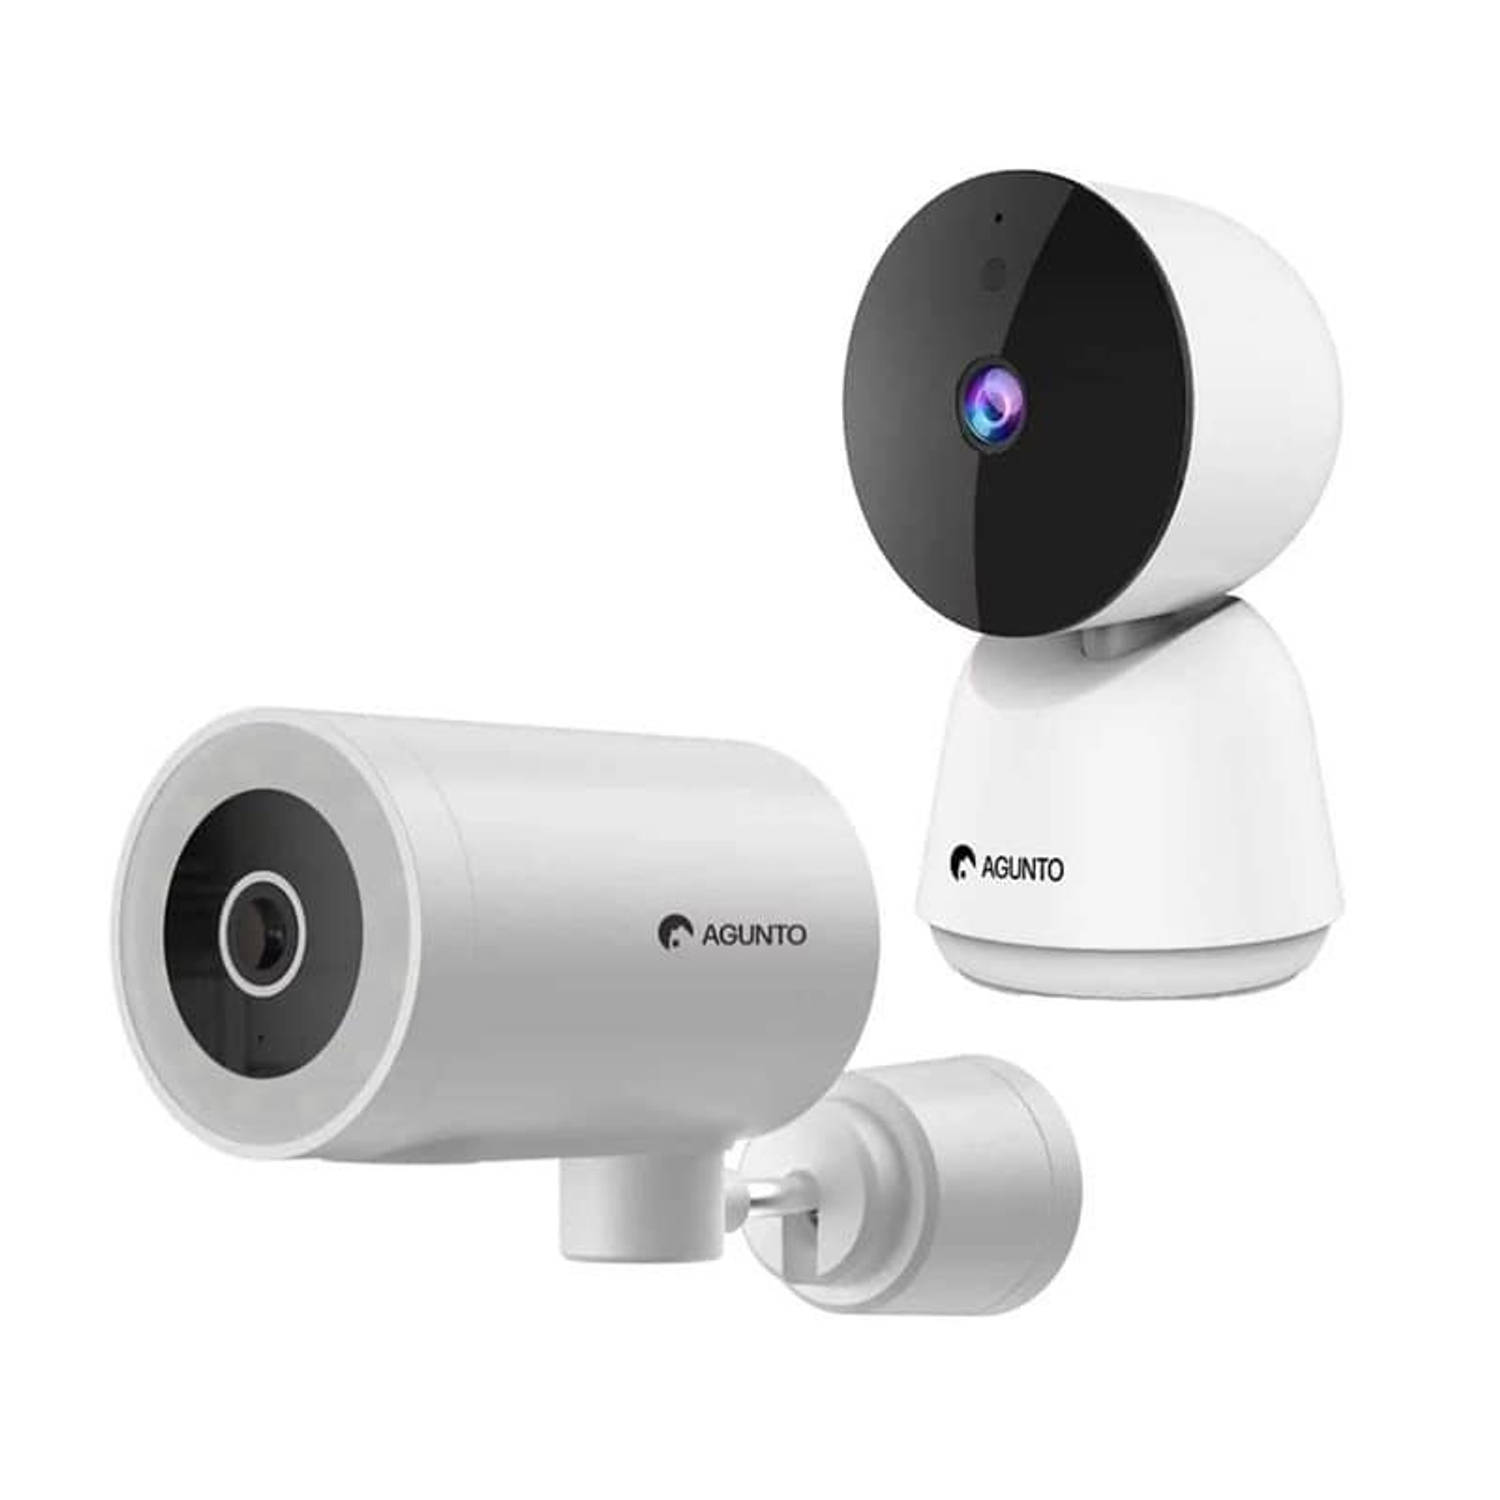 Agunto AGU-IC1 & AGU-OC1 Beveiligingscamera Bundel - Binnencamera & Buitencamera Set - Nachtzicht - Draaibaar - WiFi - Google Assistant Compatibel - Nederlandstalige App & Handleid